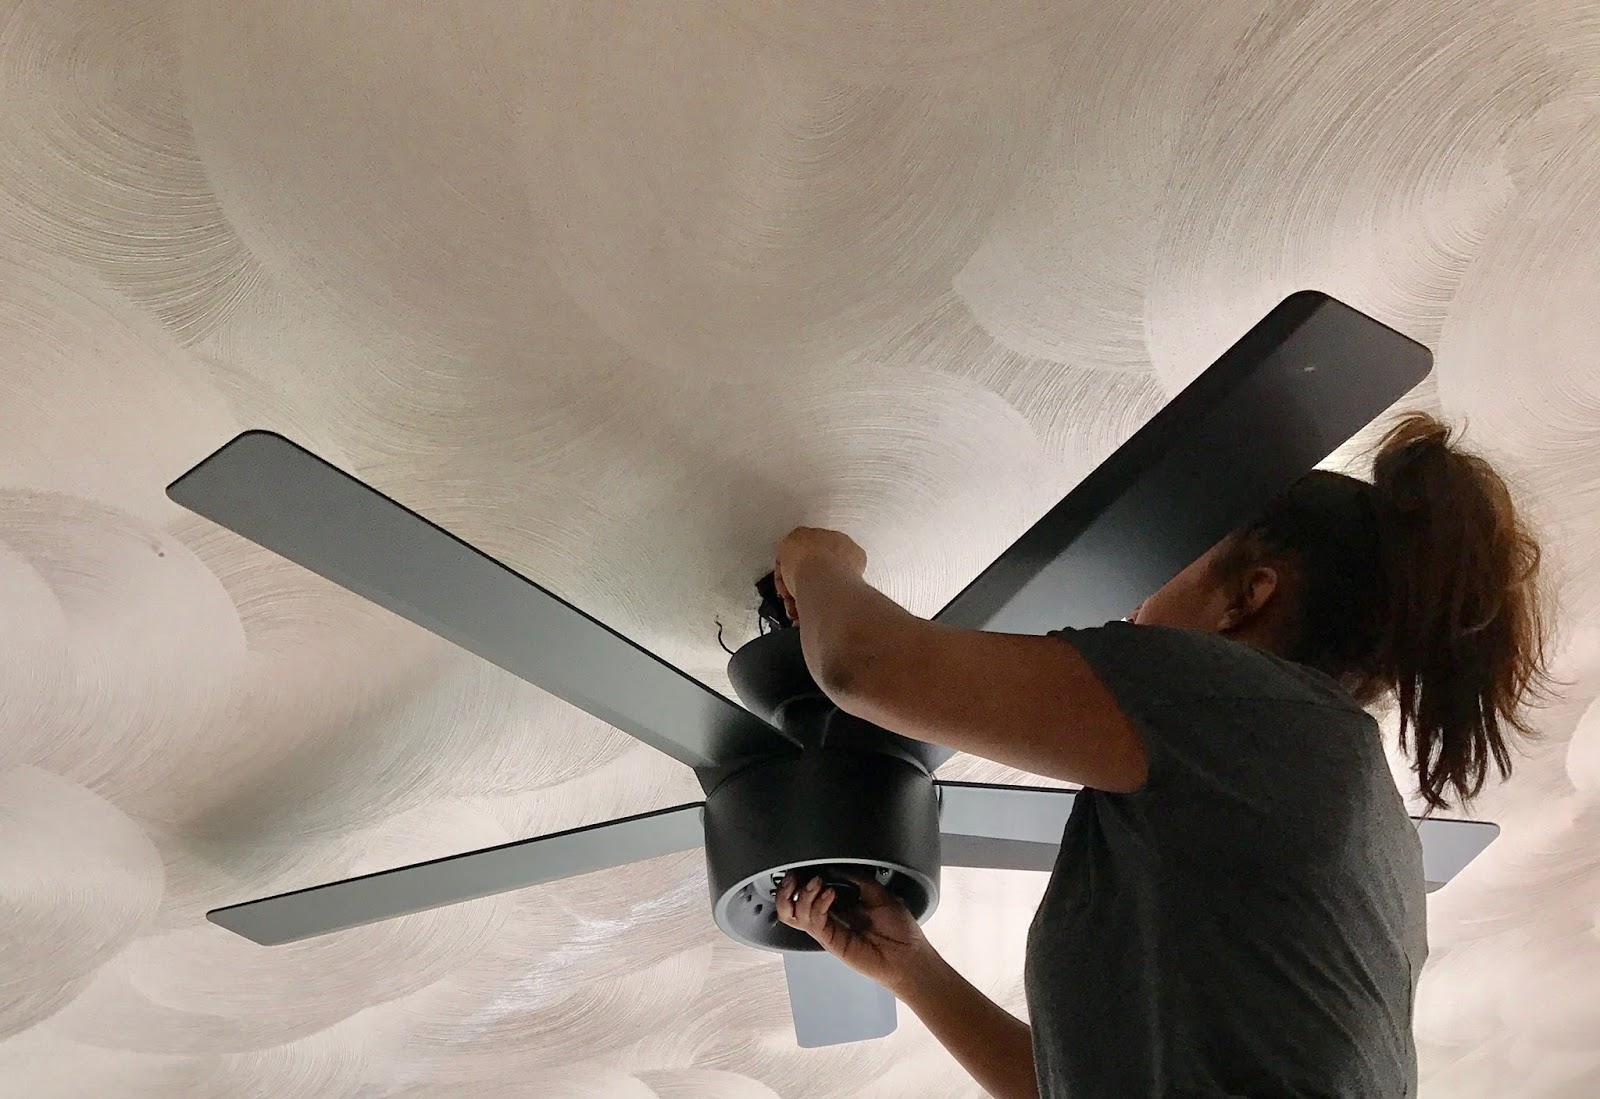 Sleek and stylish ceiling fans